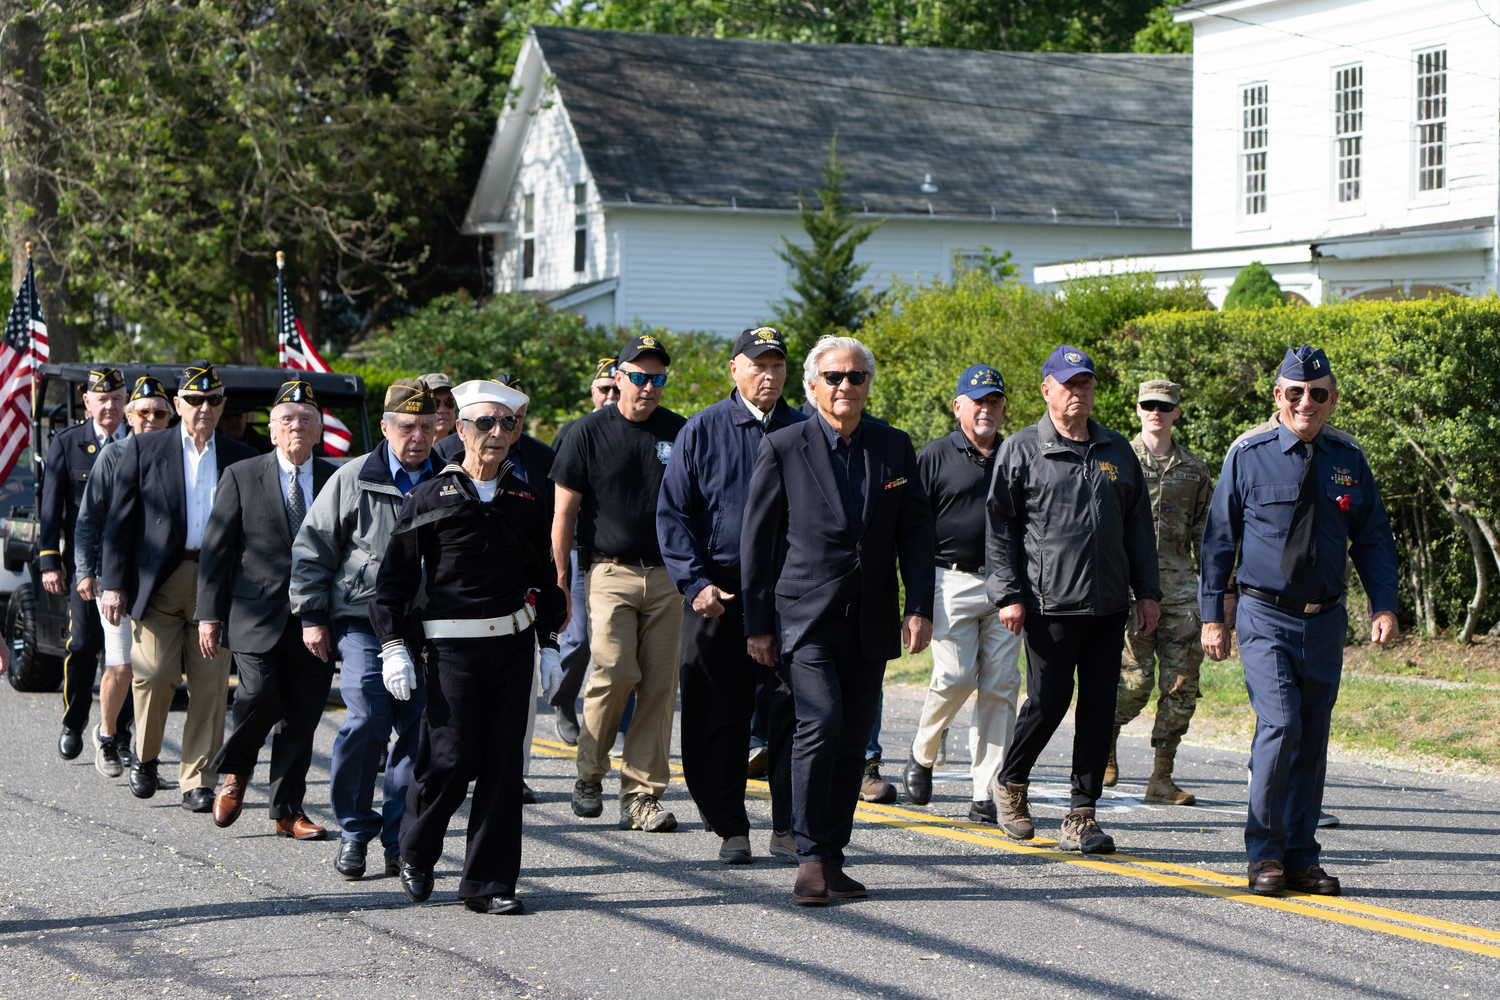 Mayor Jim Larocca joined other veterans in Sag Harbor's annual Memorial Day parade. LORI HAWKINS